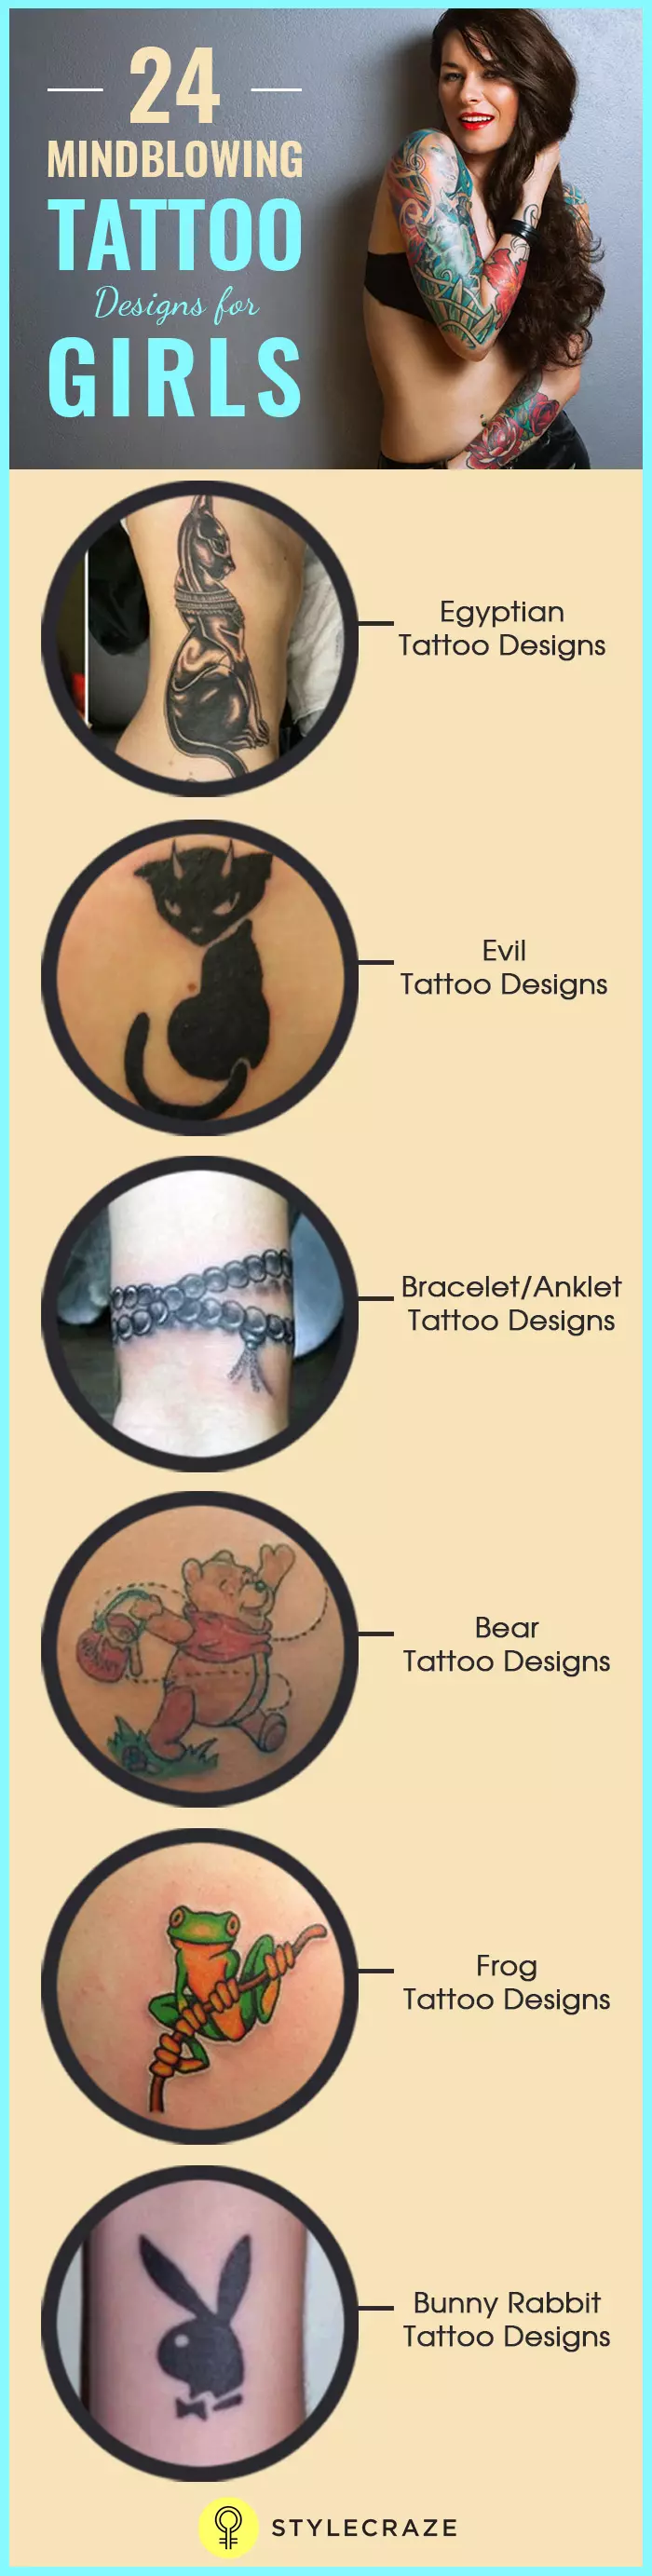 Mindblowing-Tattoo-Designs-For-Girls,